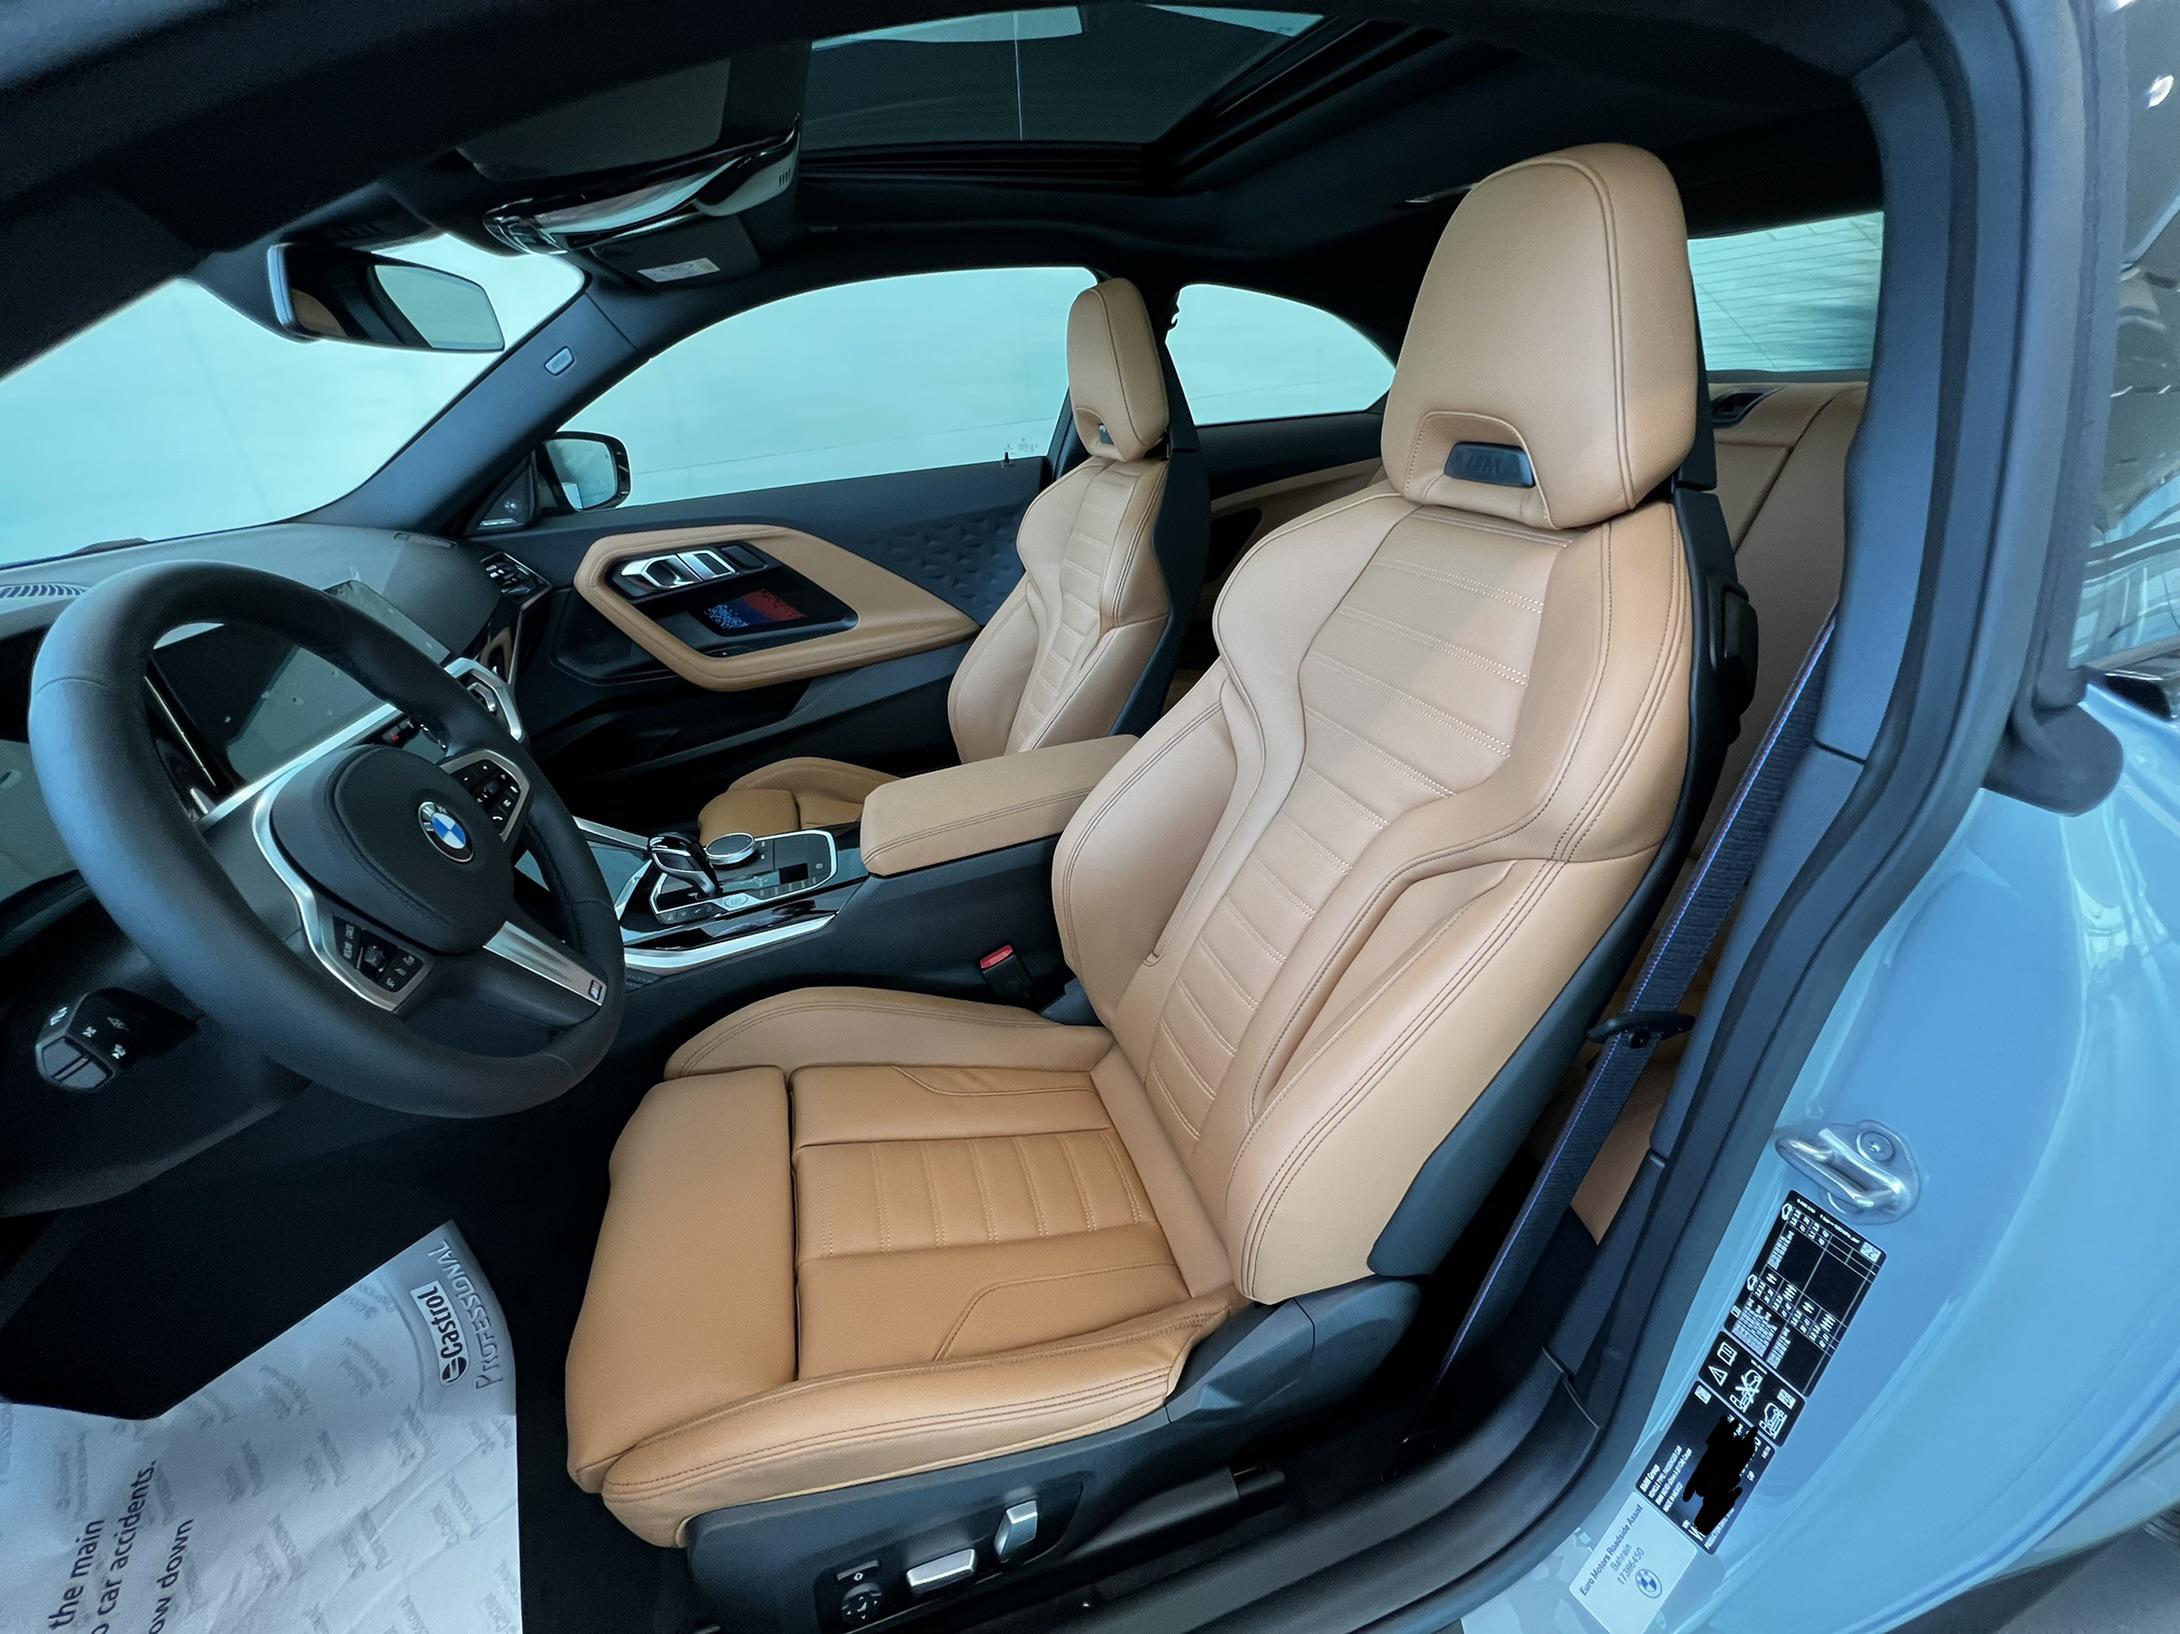 BMW M240i interior - Seats